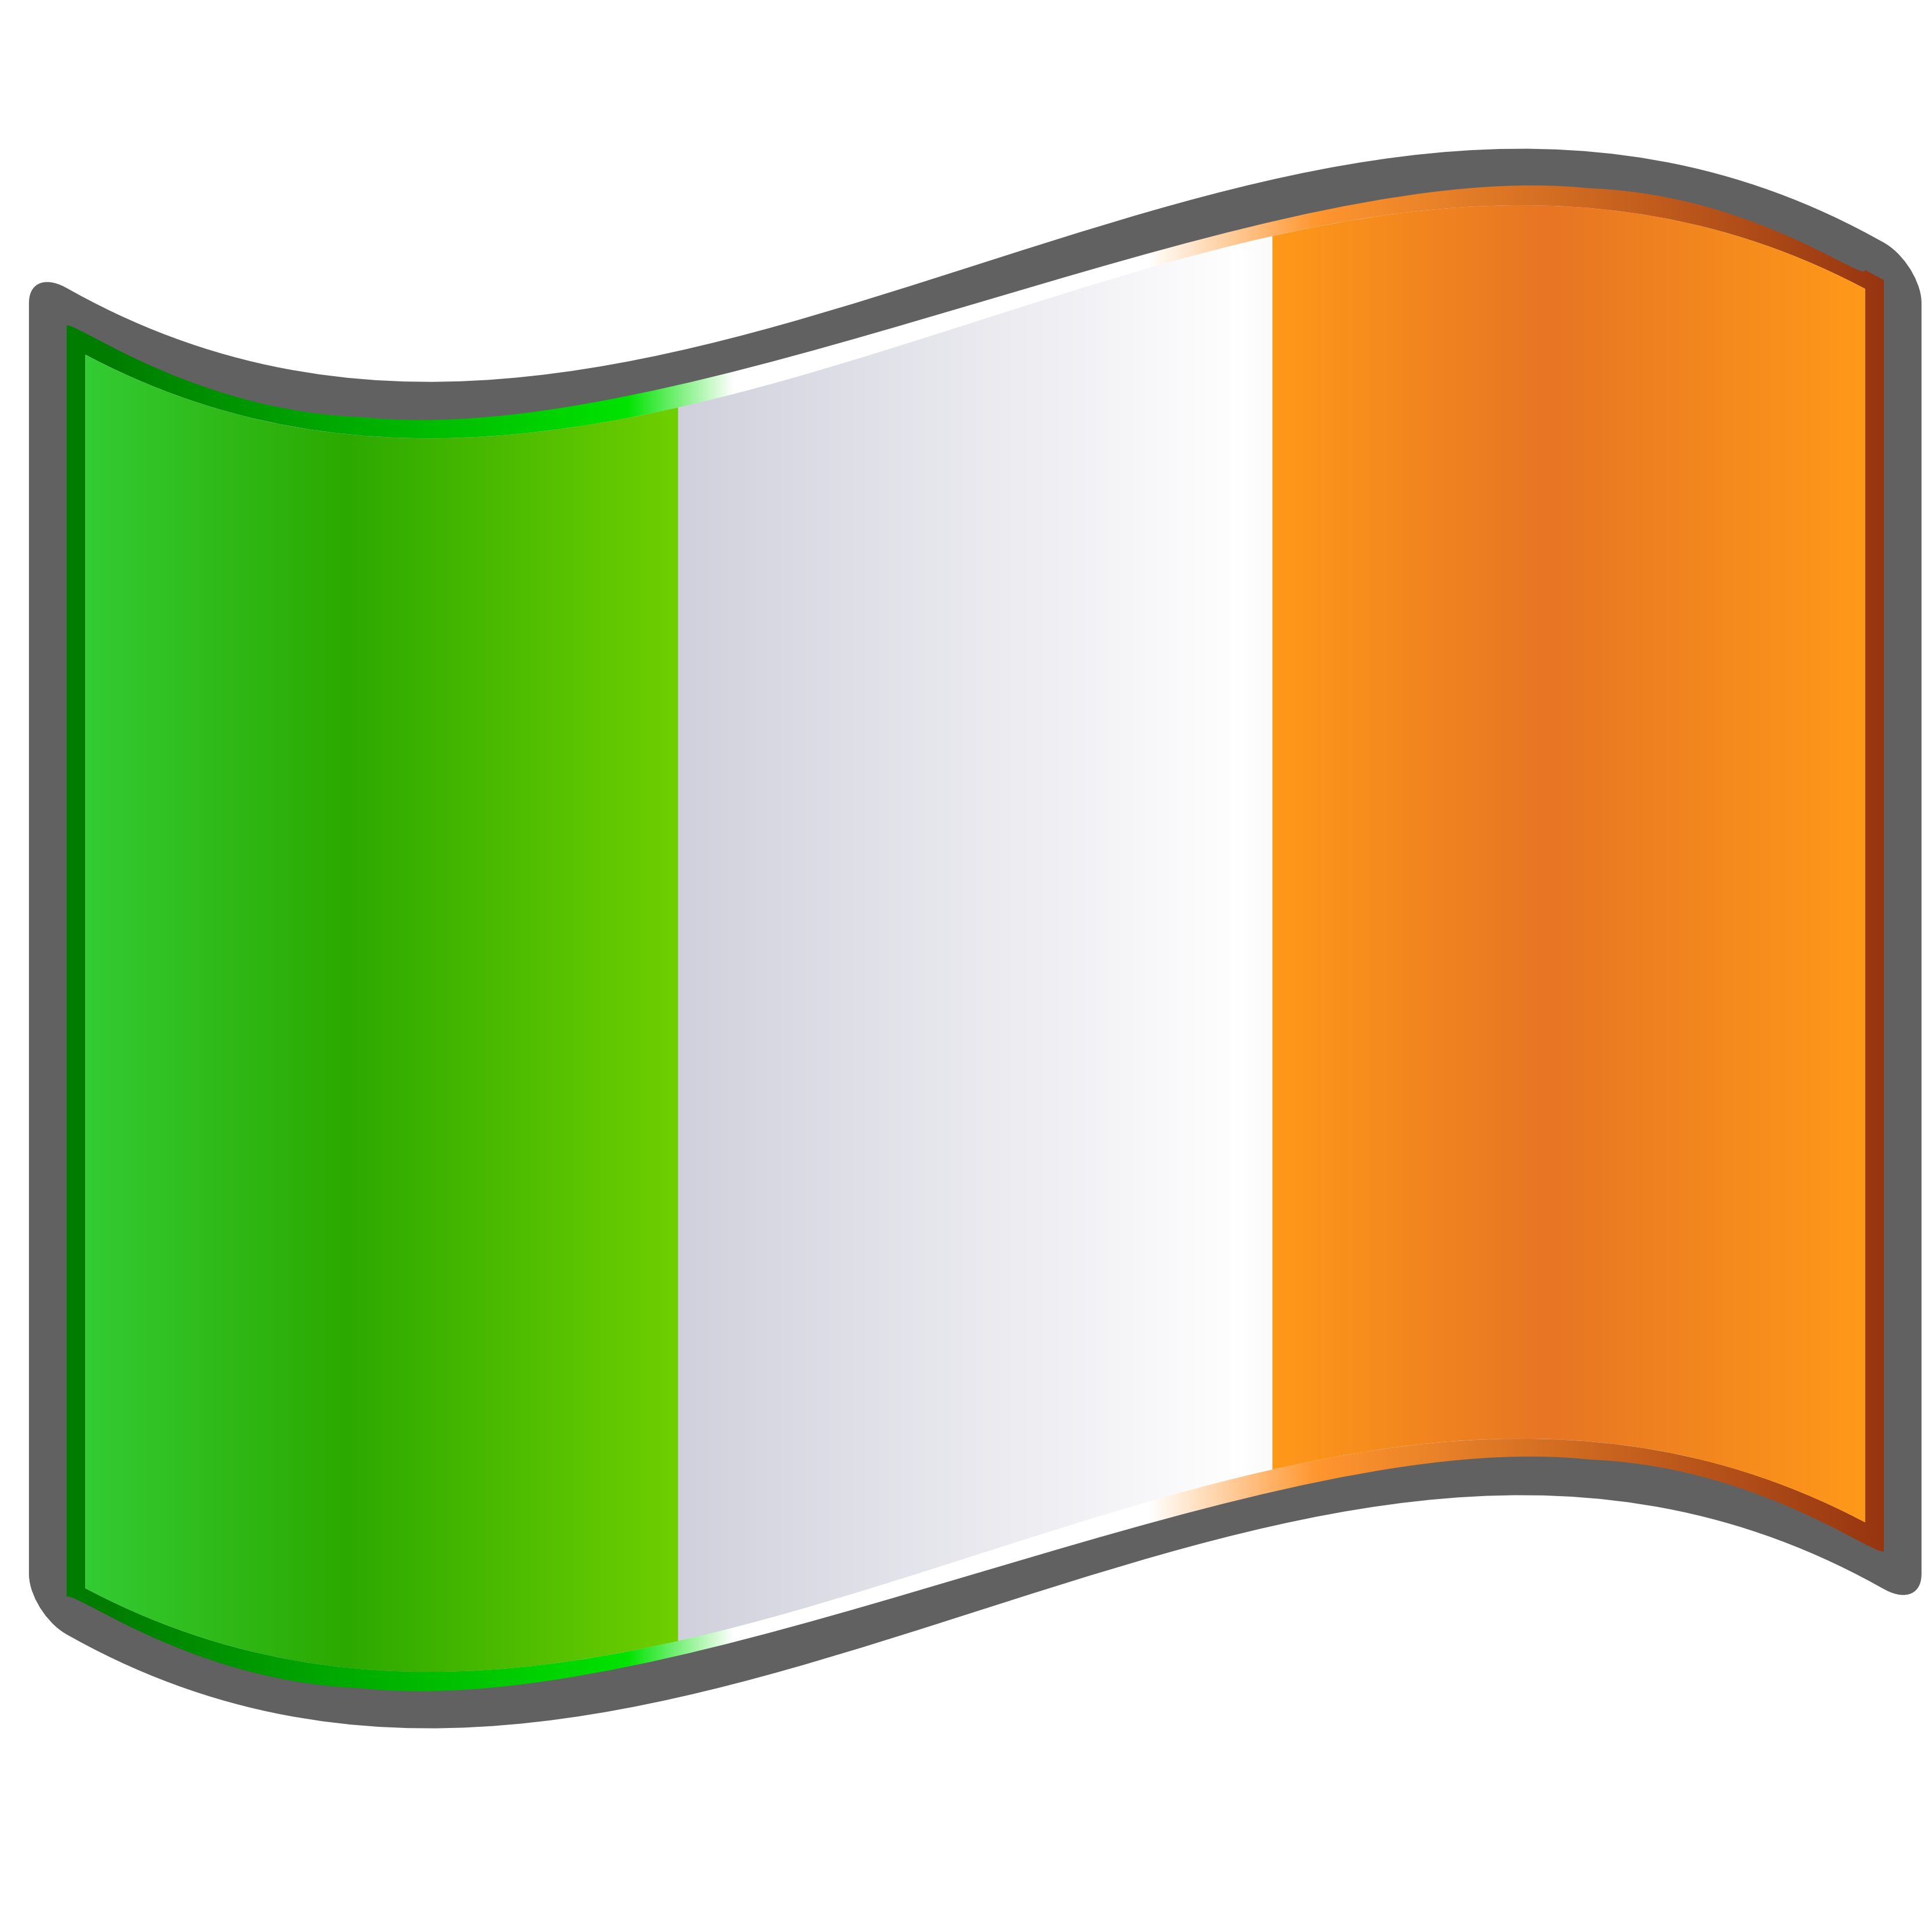 Irish flag clipart kid 2